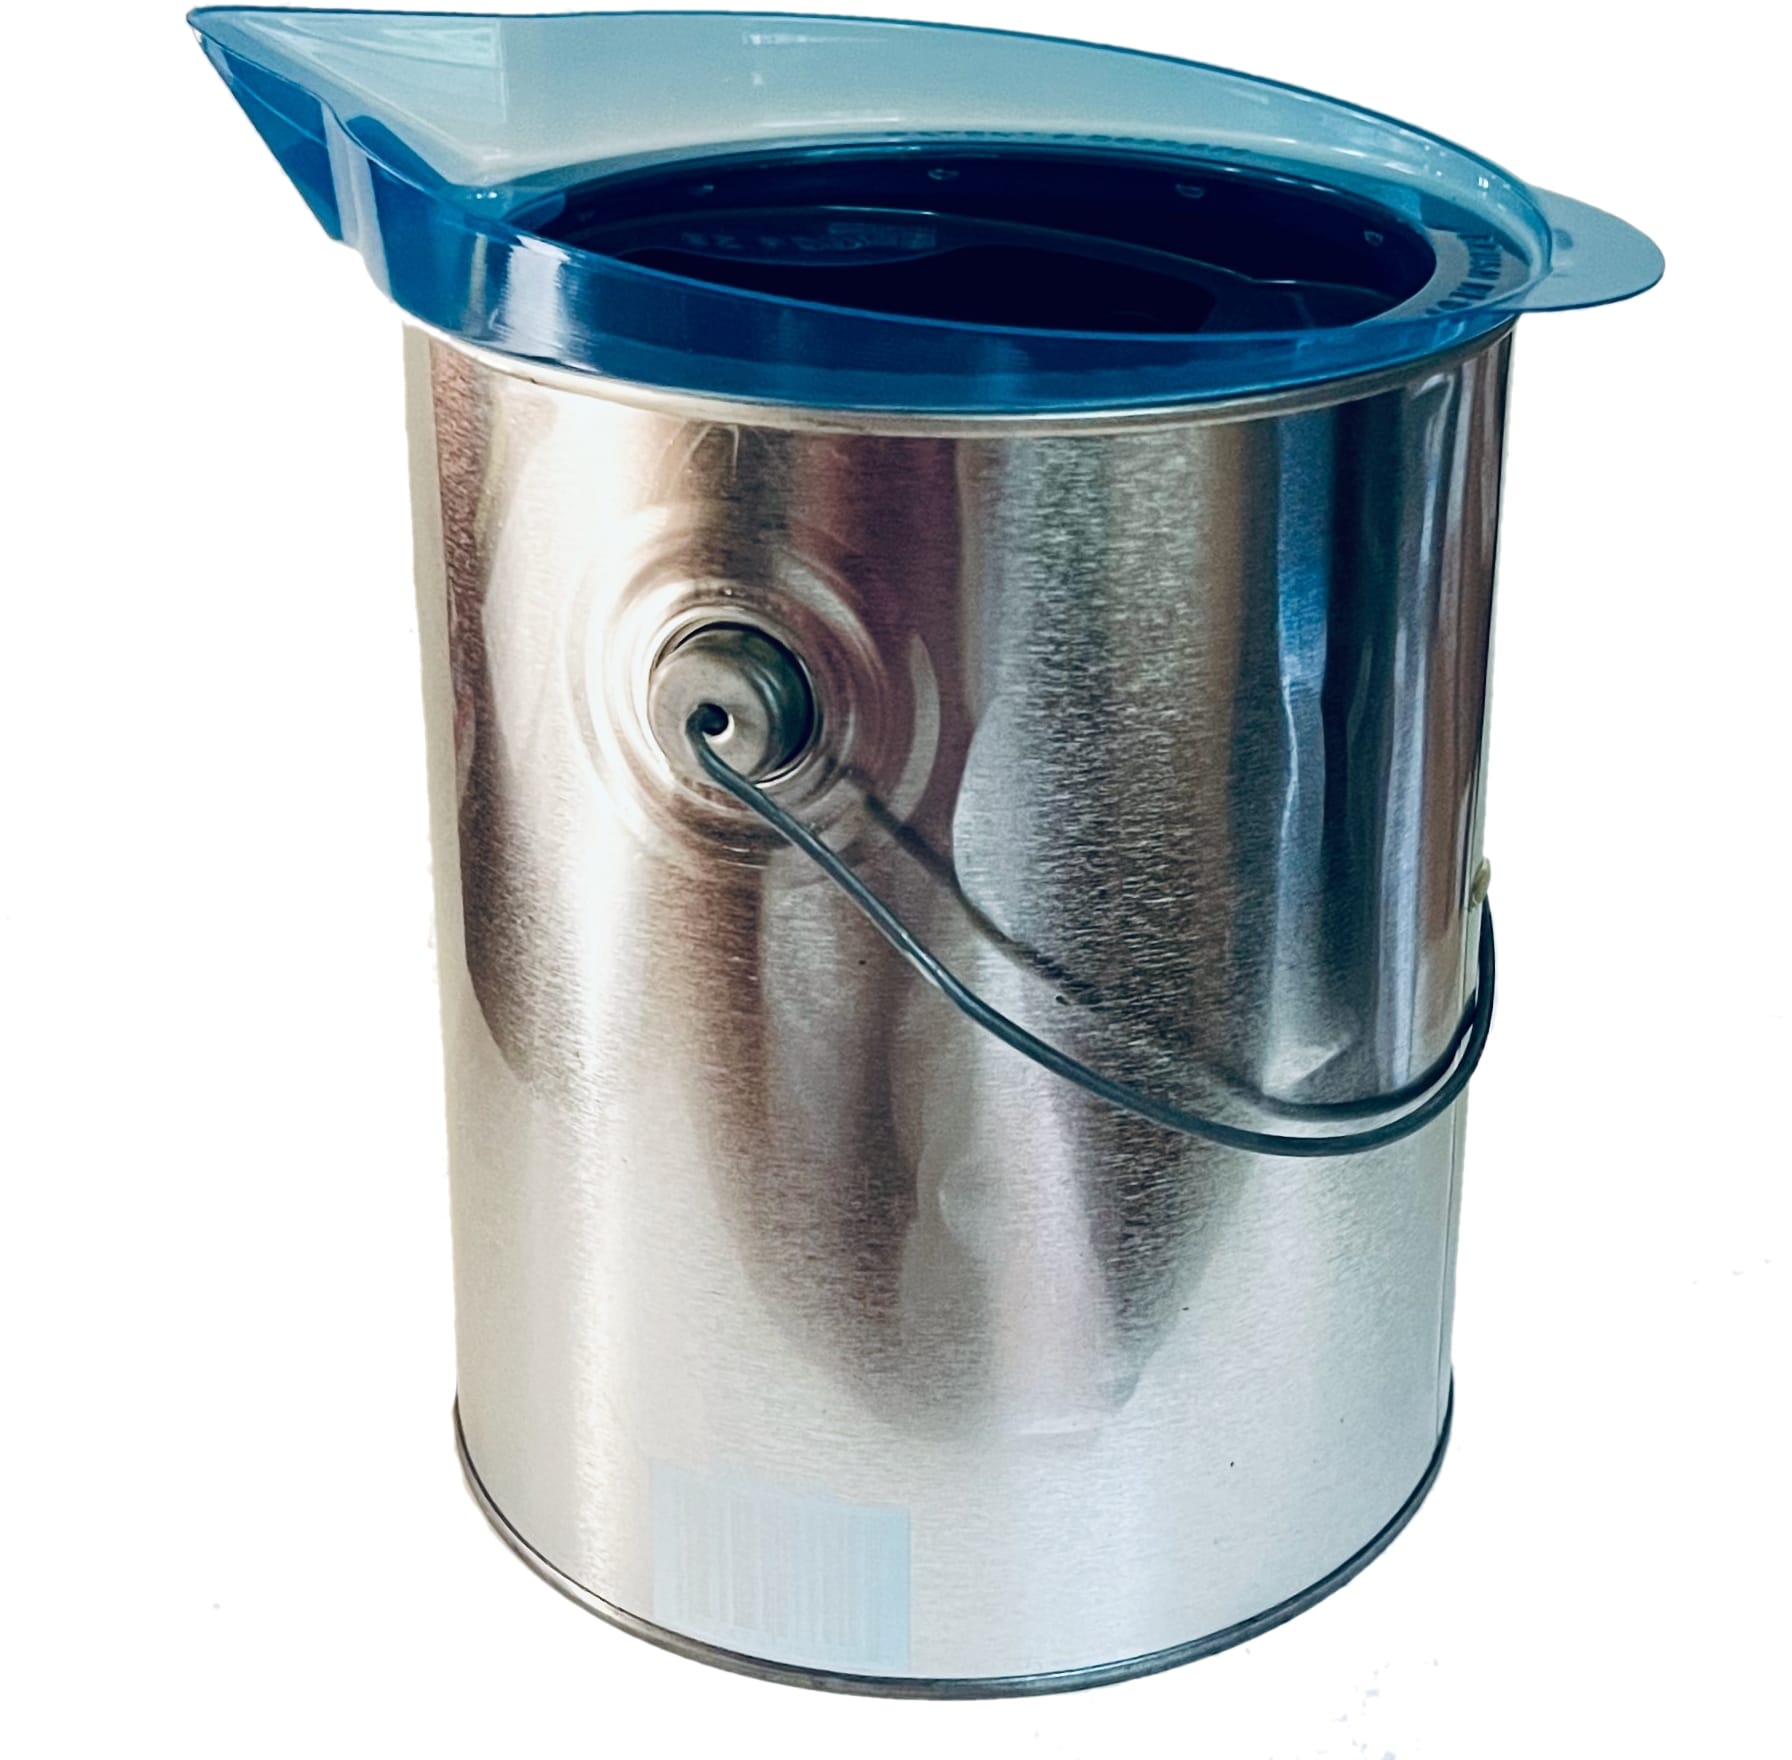 Paint Bucket Cover, Paint Can Pour Spout with Air Hole 2pcs 6.7 inch Paint Can Spout Dustproof and Leakproof Paint Can Lid with Pour Spout for Paint